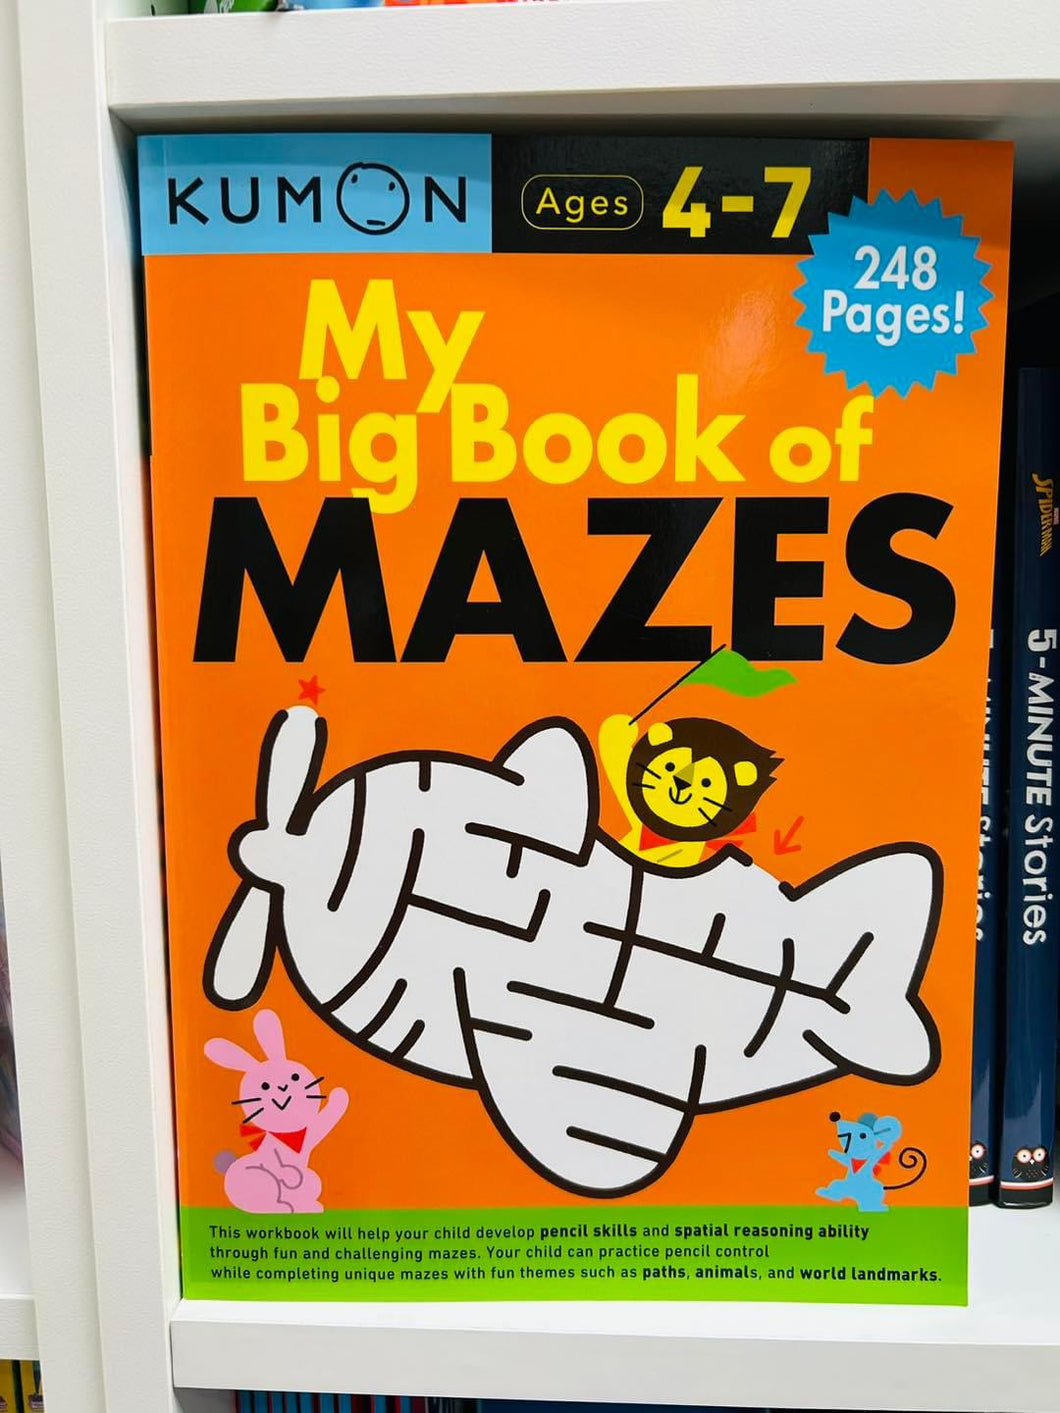 Kumon My big book of mazes